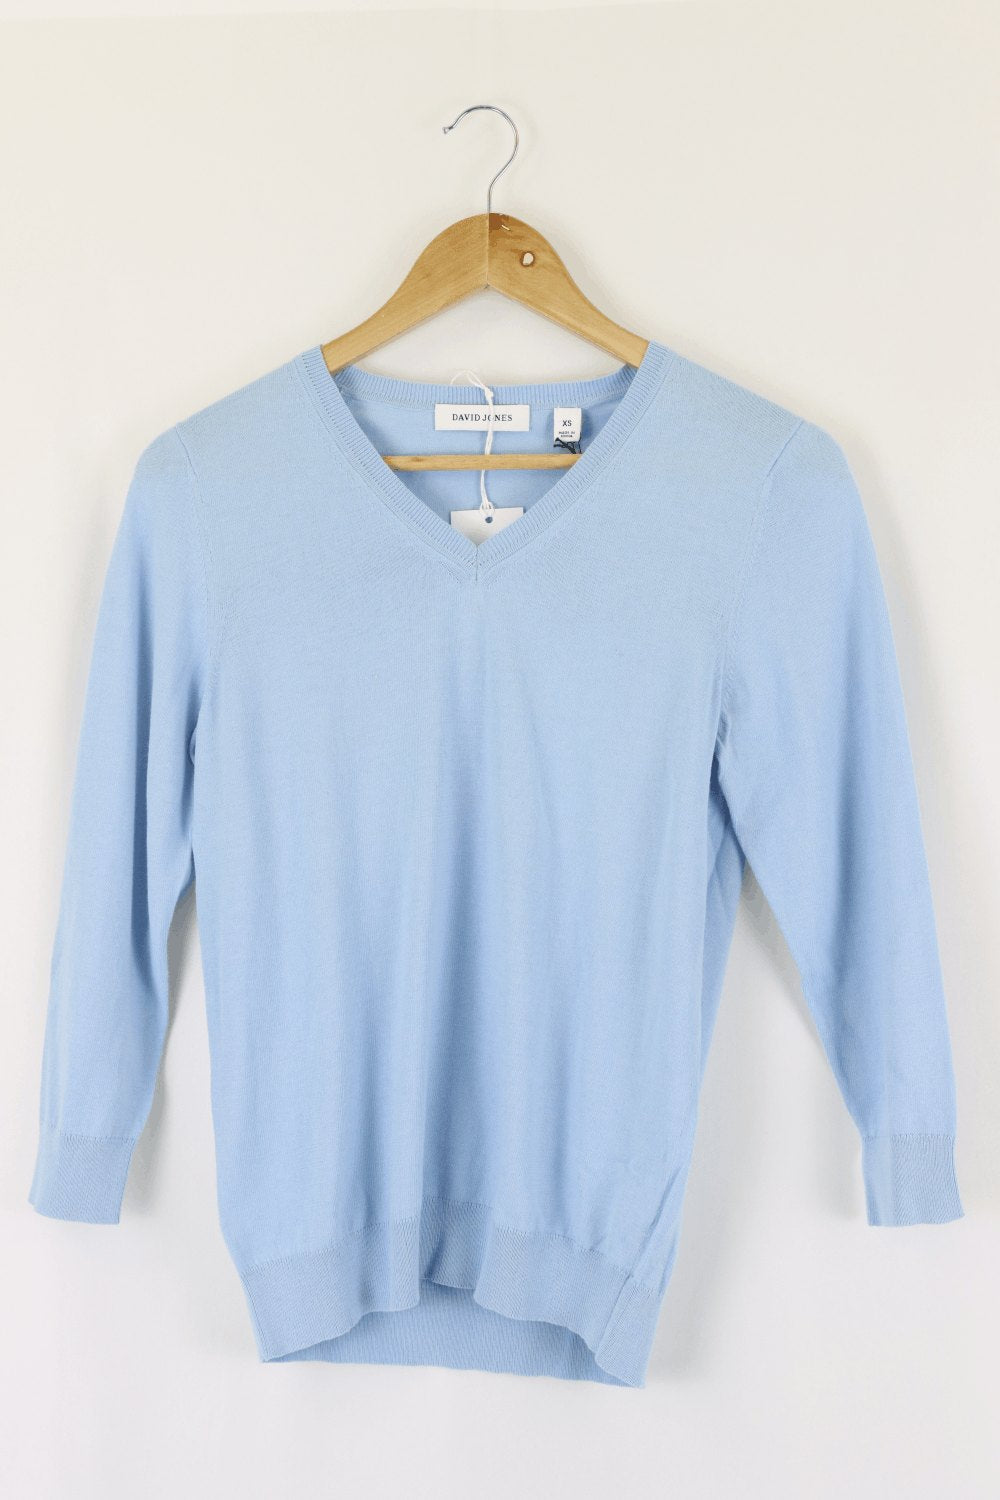 David Jones Blue Sweater XS